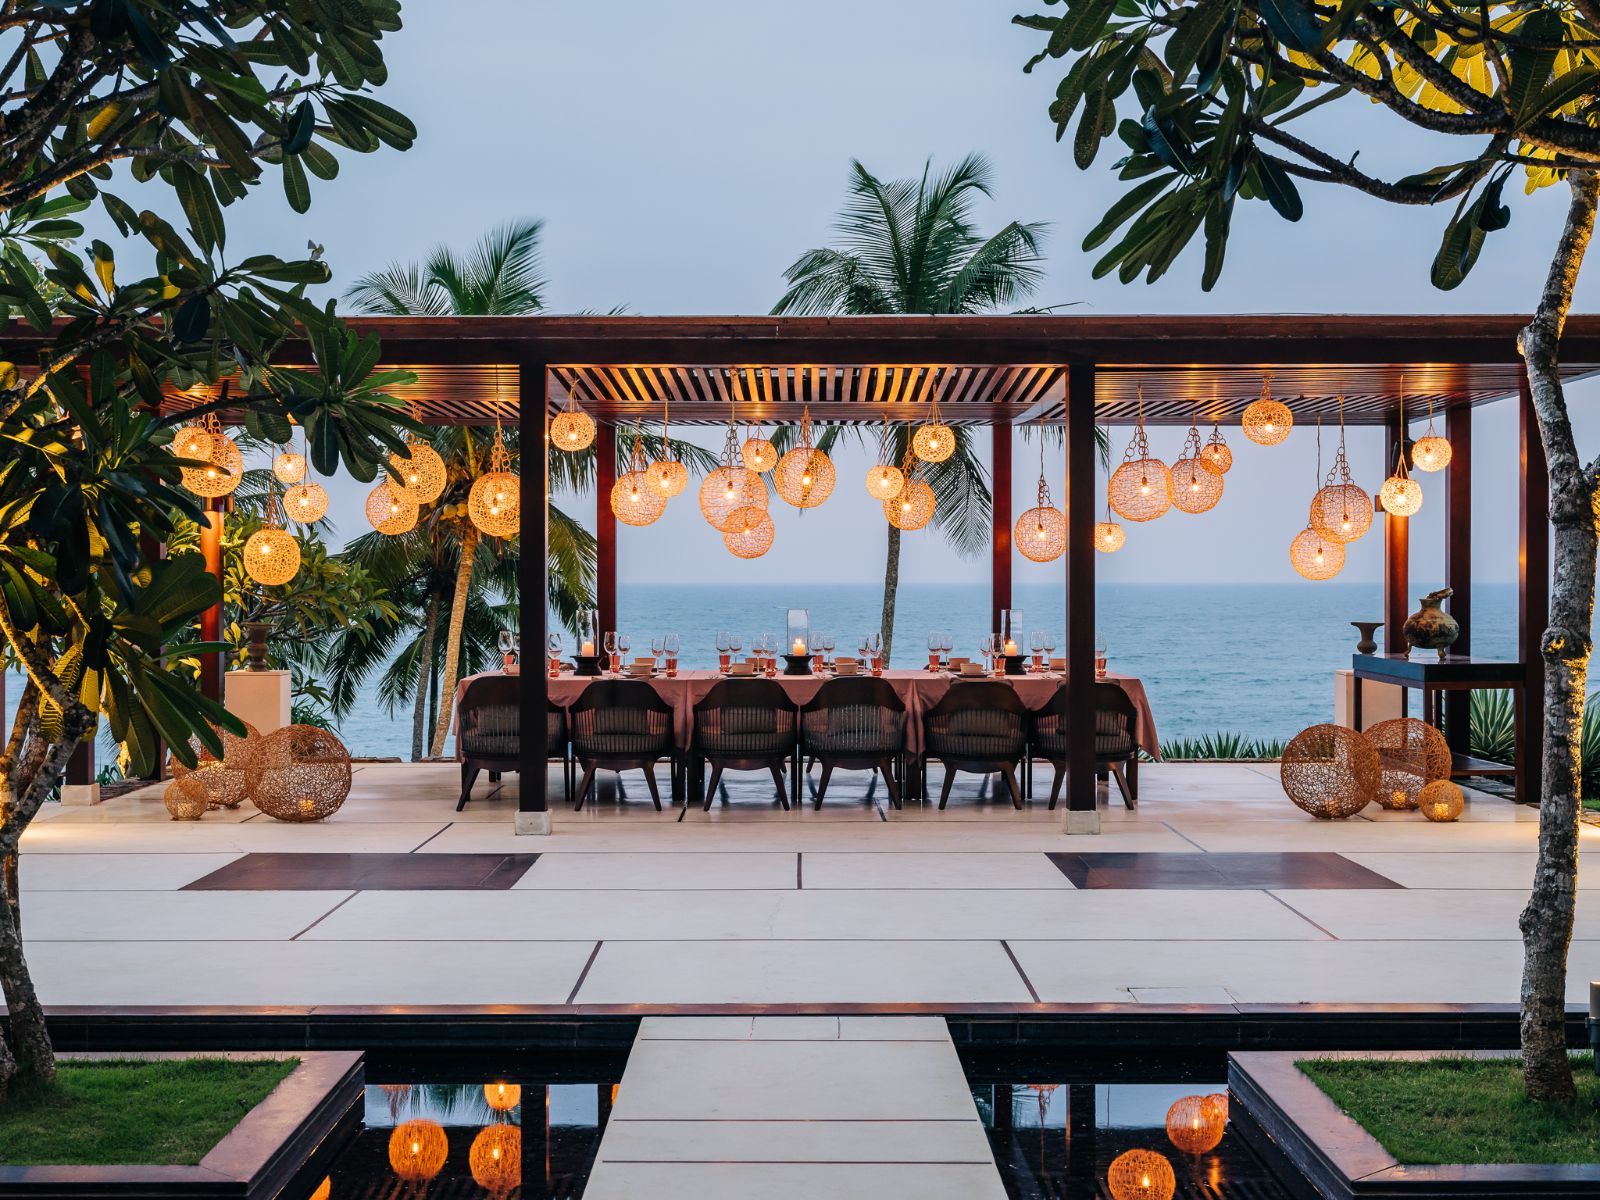 Alfresco dining pavilion at ANI Sri Lanka on Sri Lanka's south coast